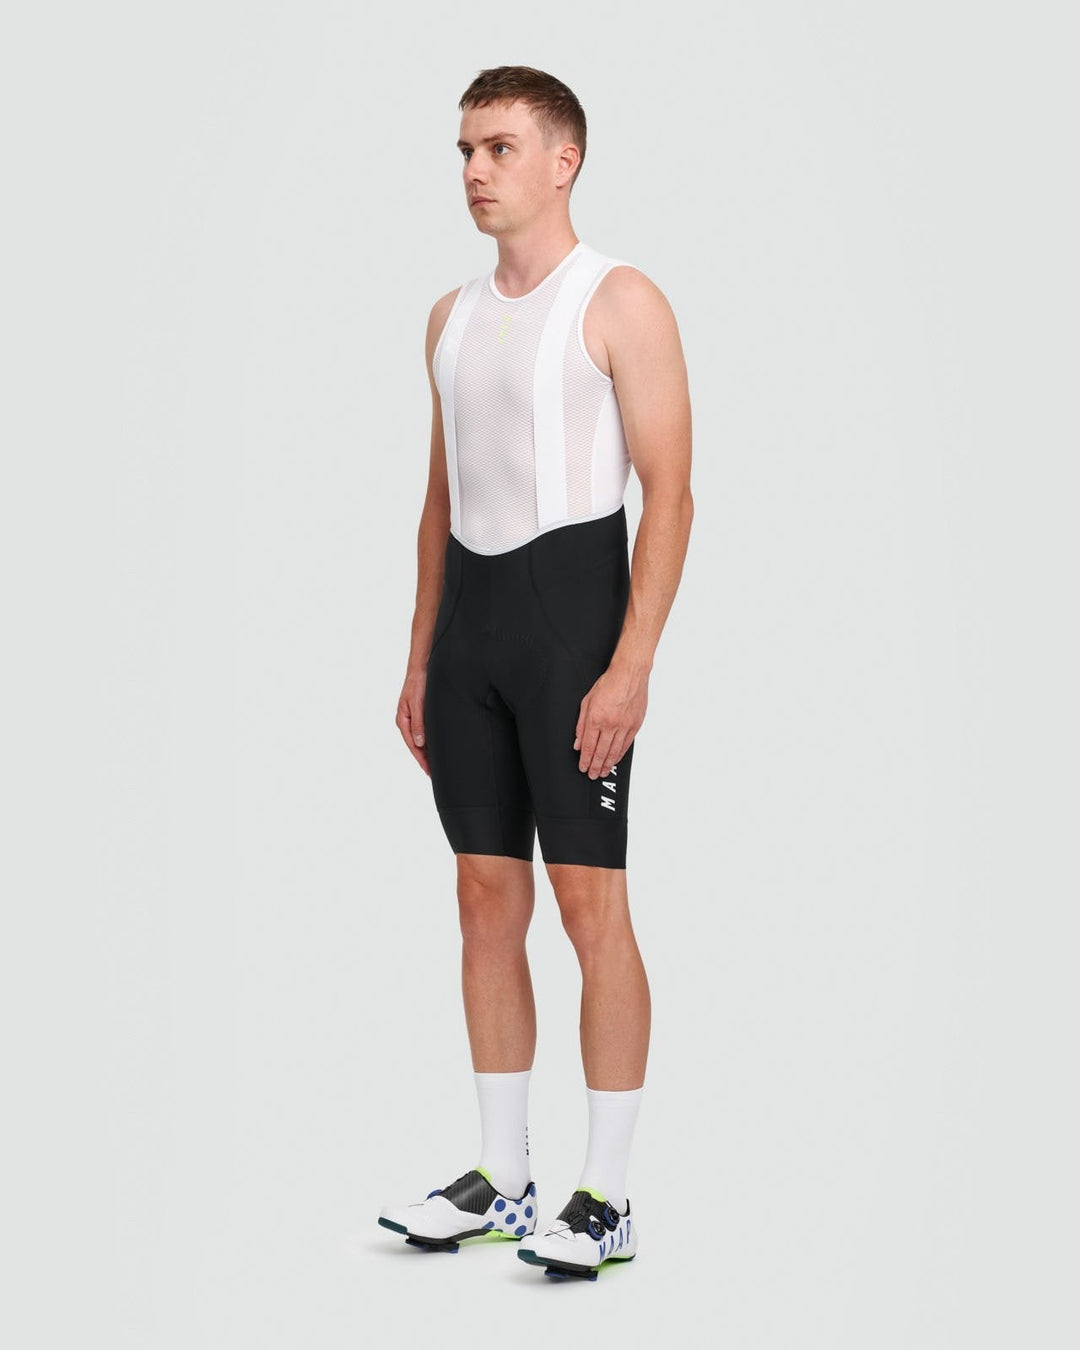 Men's Team Bib Evo, Black/White - Mackay Cycles - [product_SKU] - MAAP